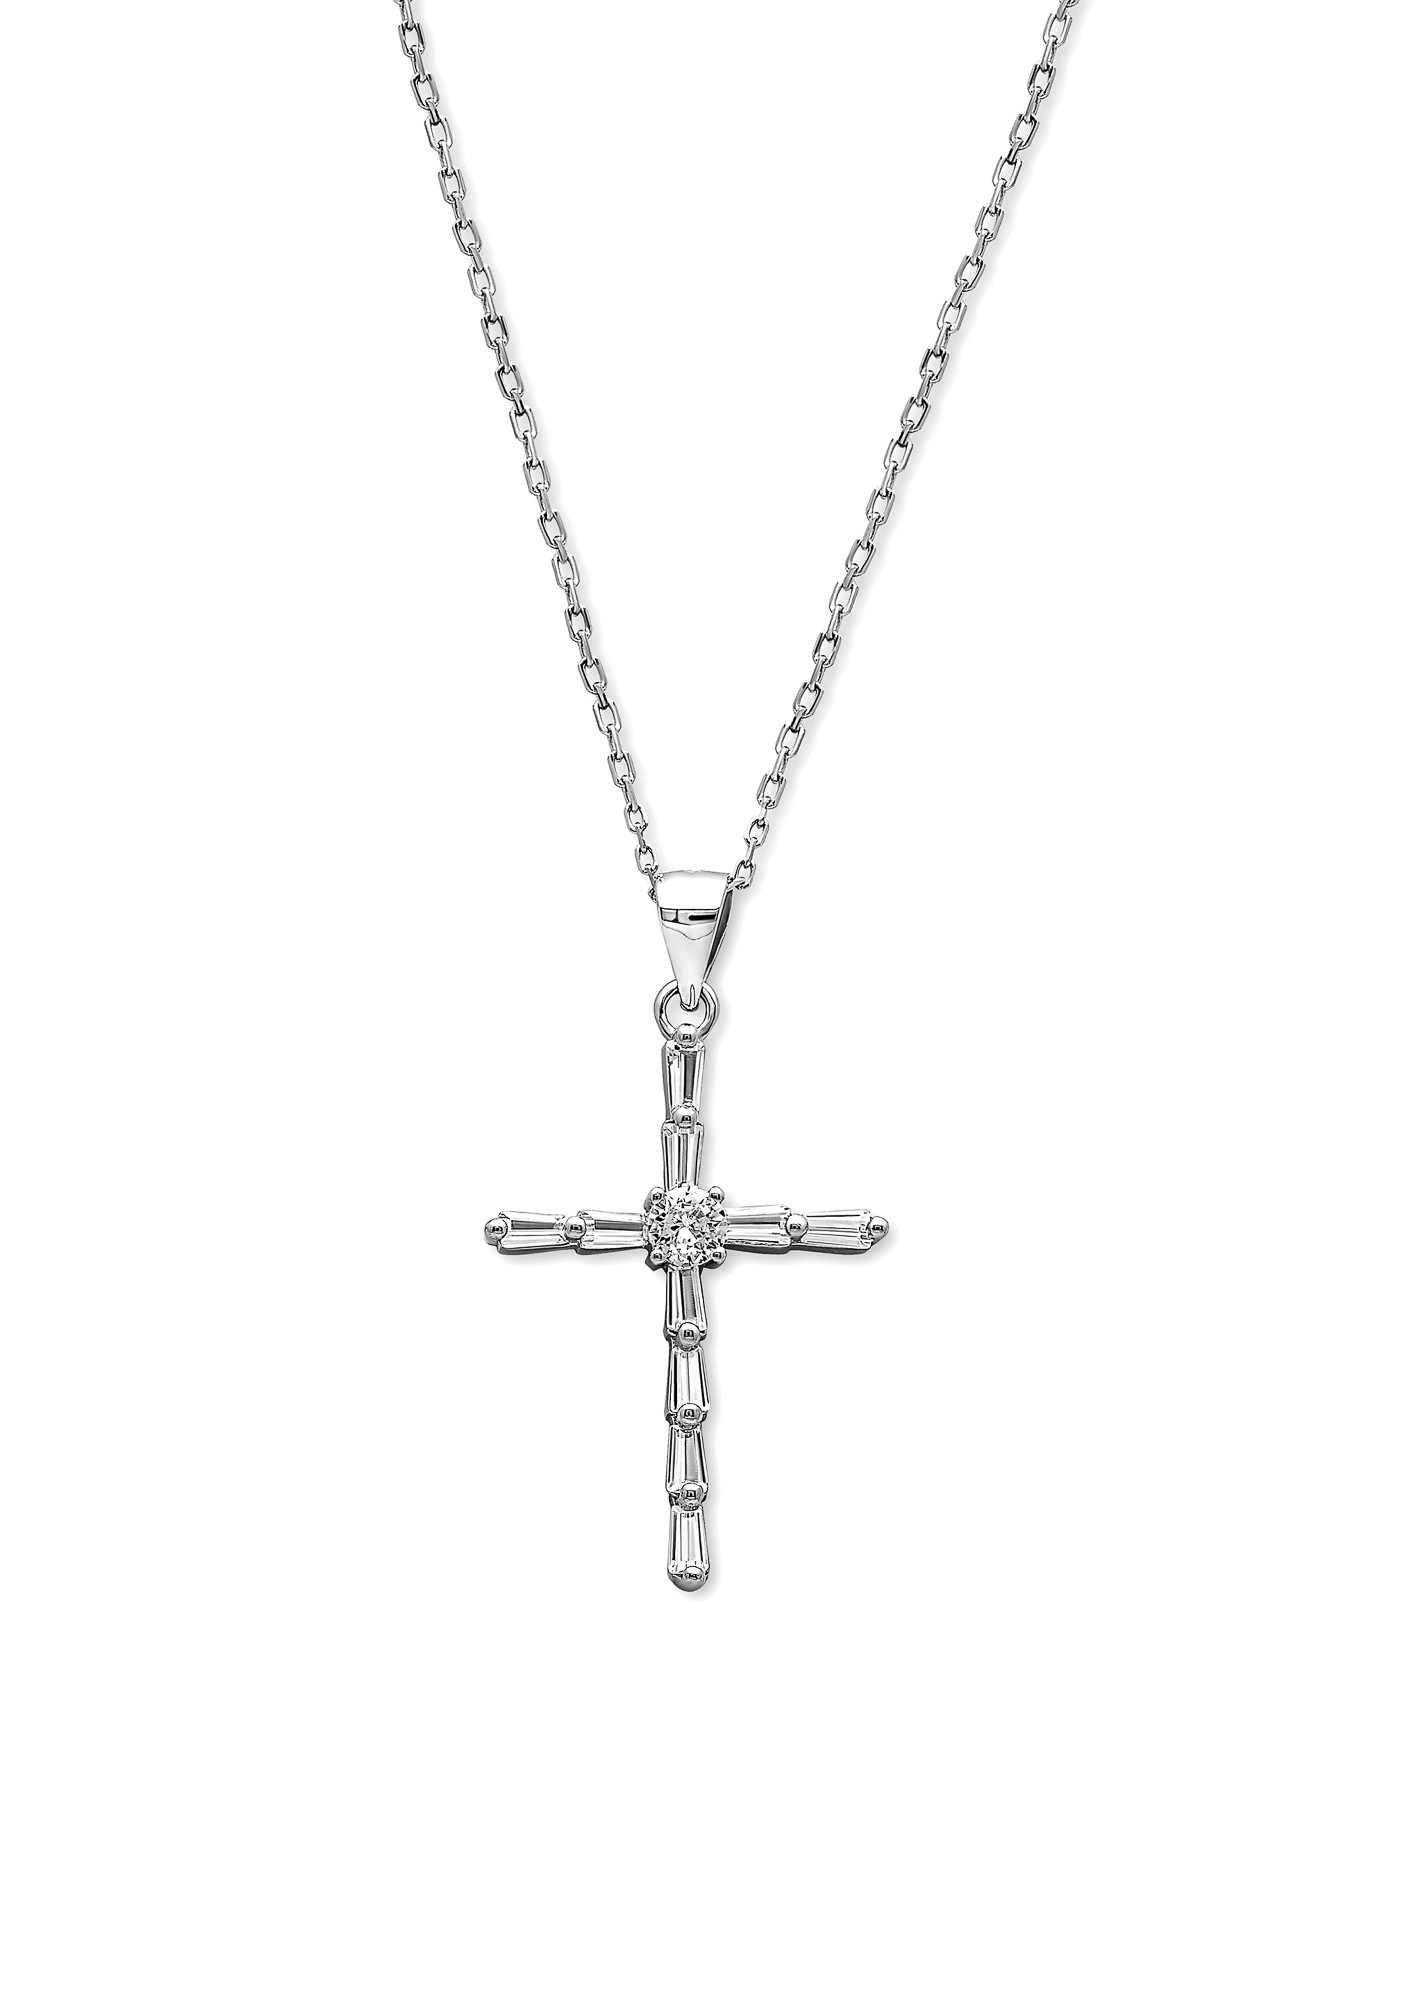 Fashion Cubic Zirconia Cross Necklace Pendant 925 Silver Filled Women  Jewelry | eBay